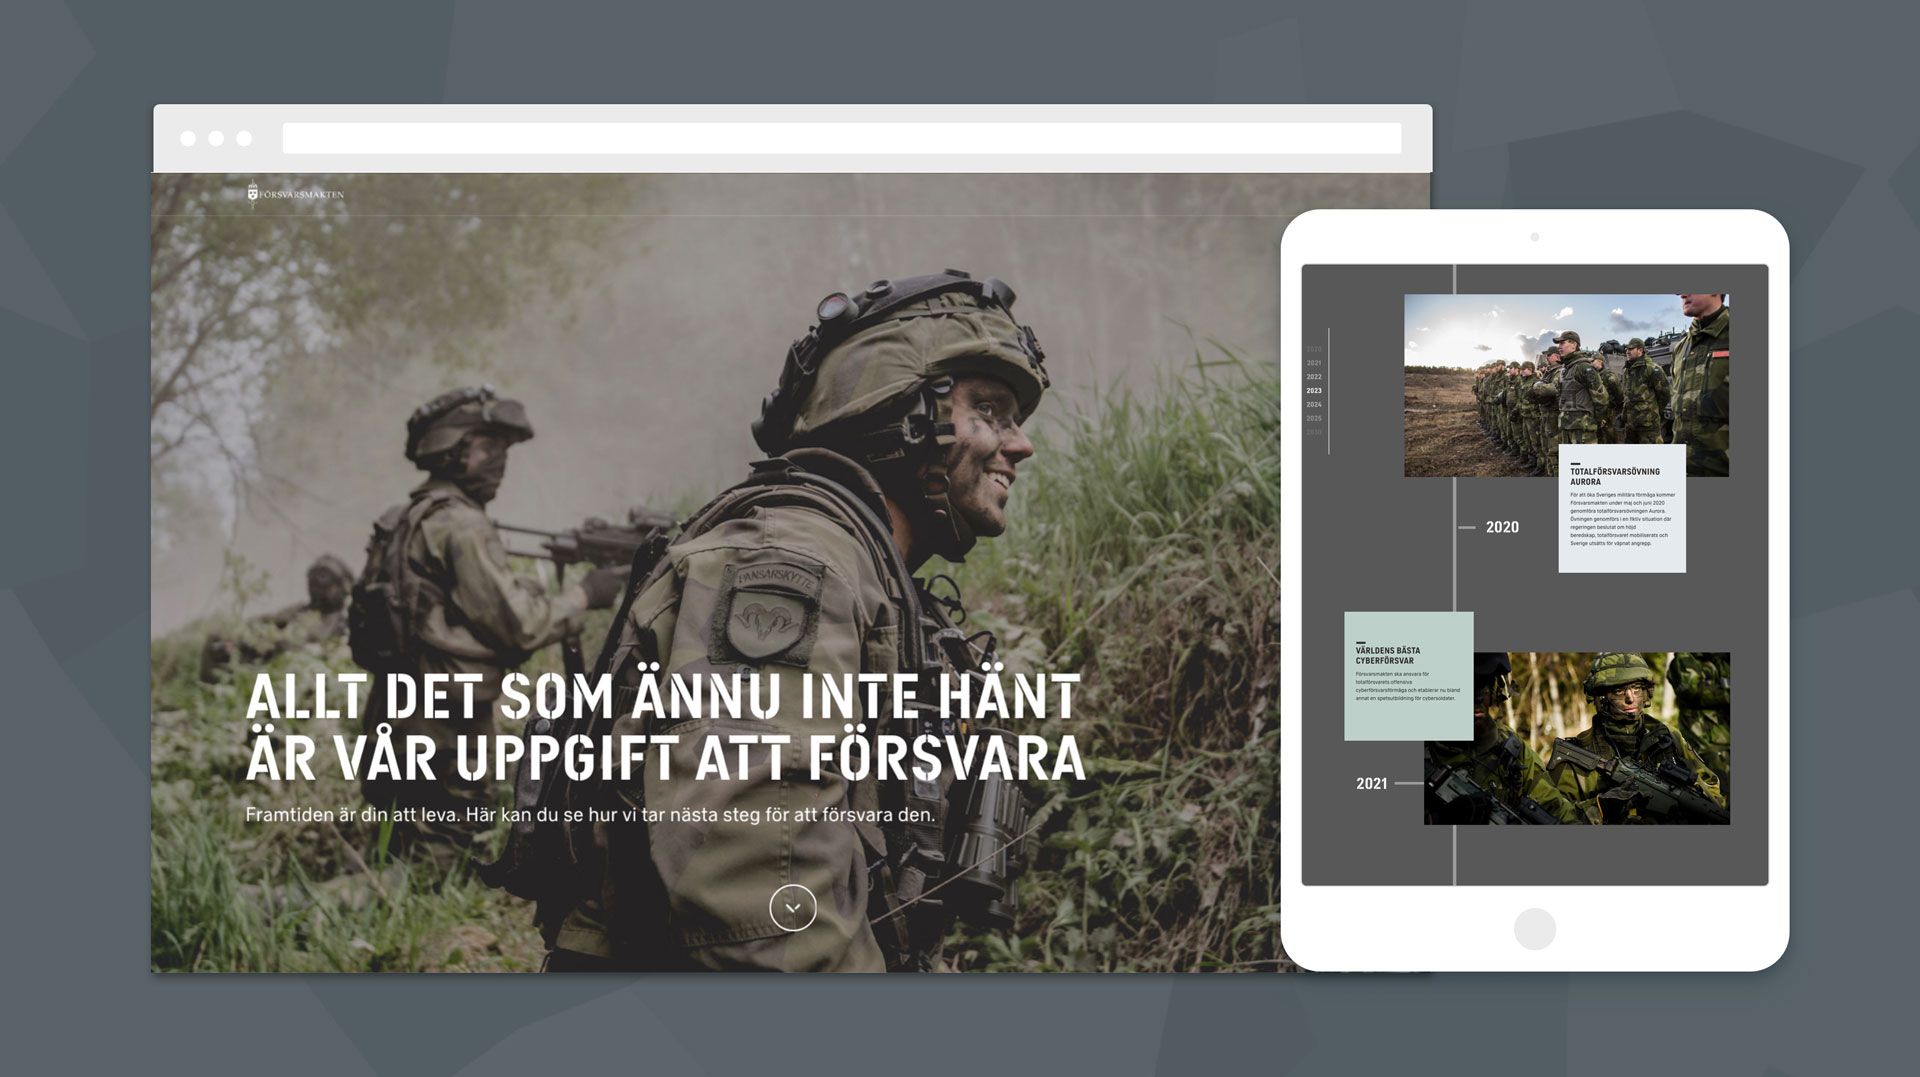 swedish-armed-forces-image-1jpeg